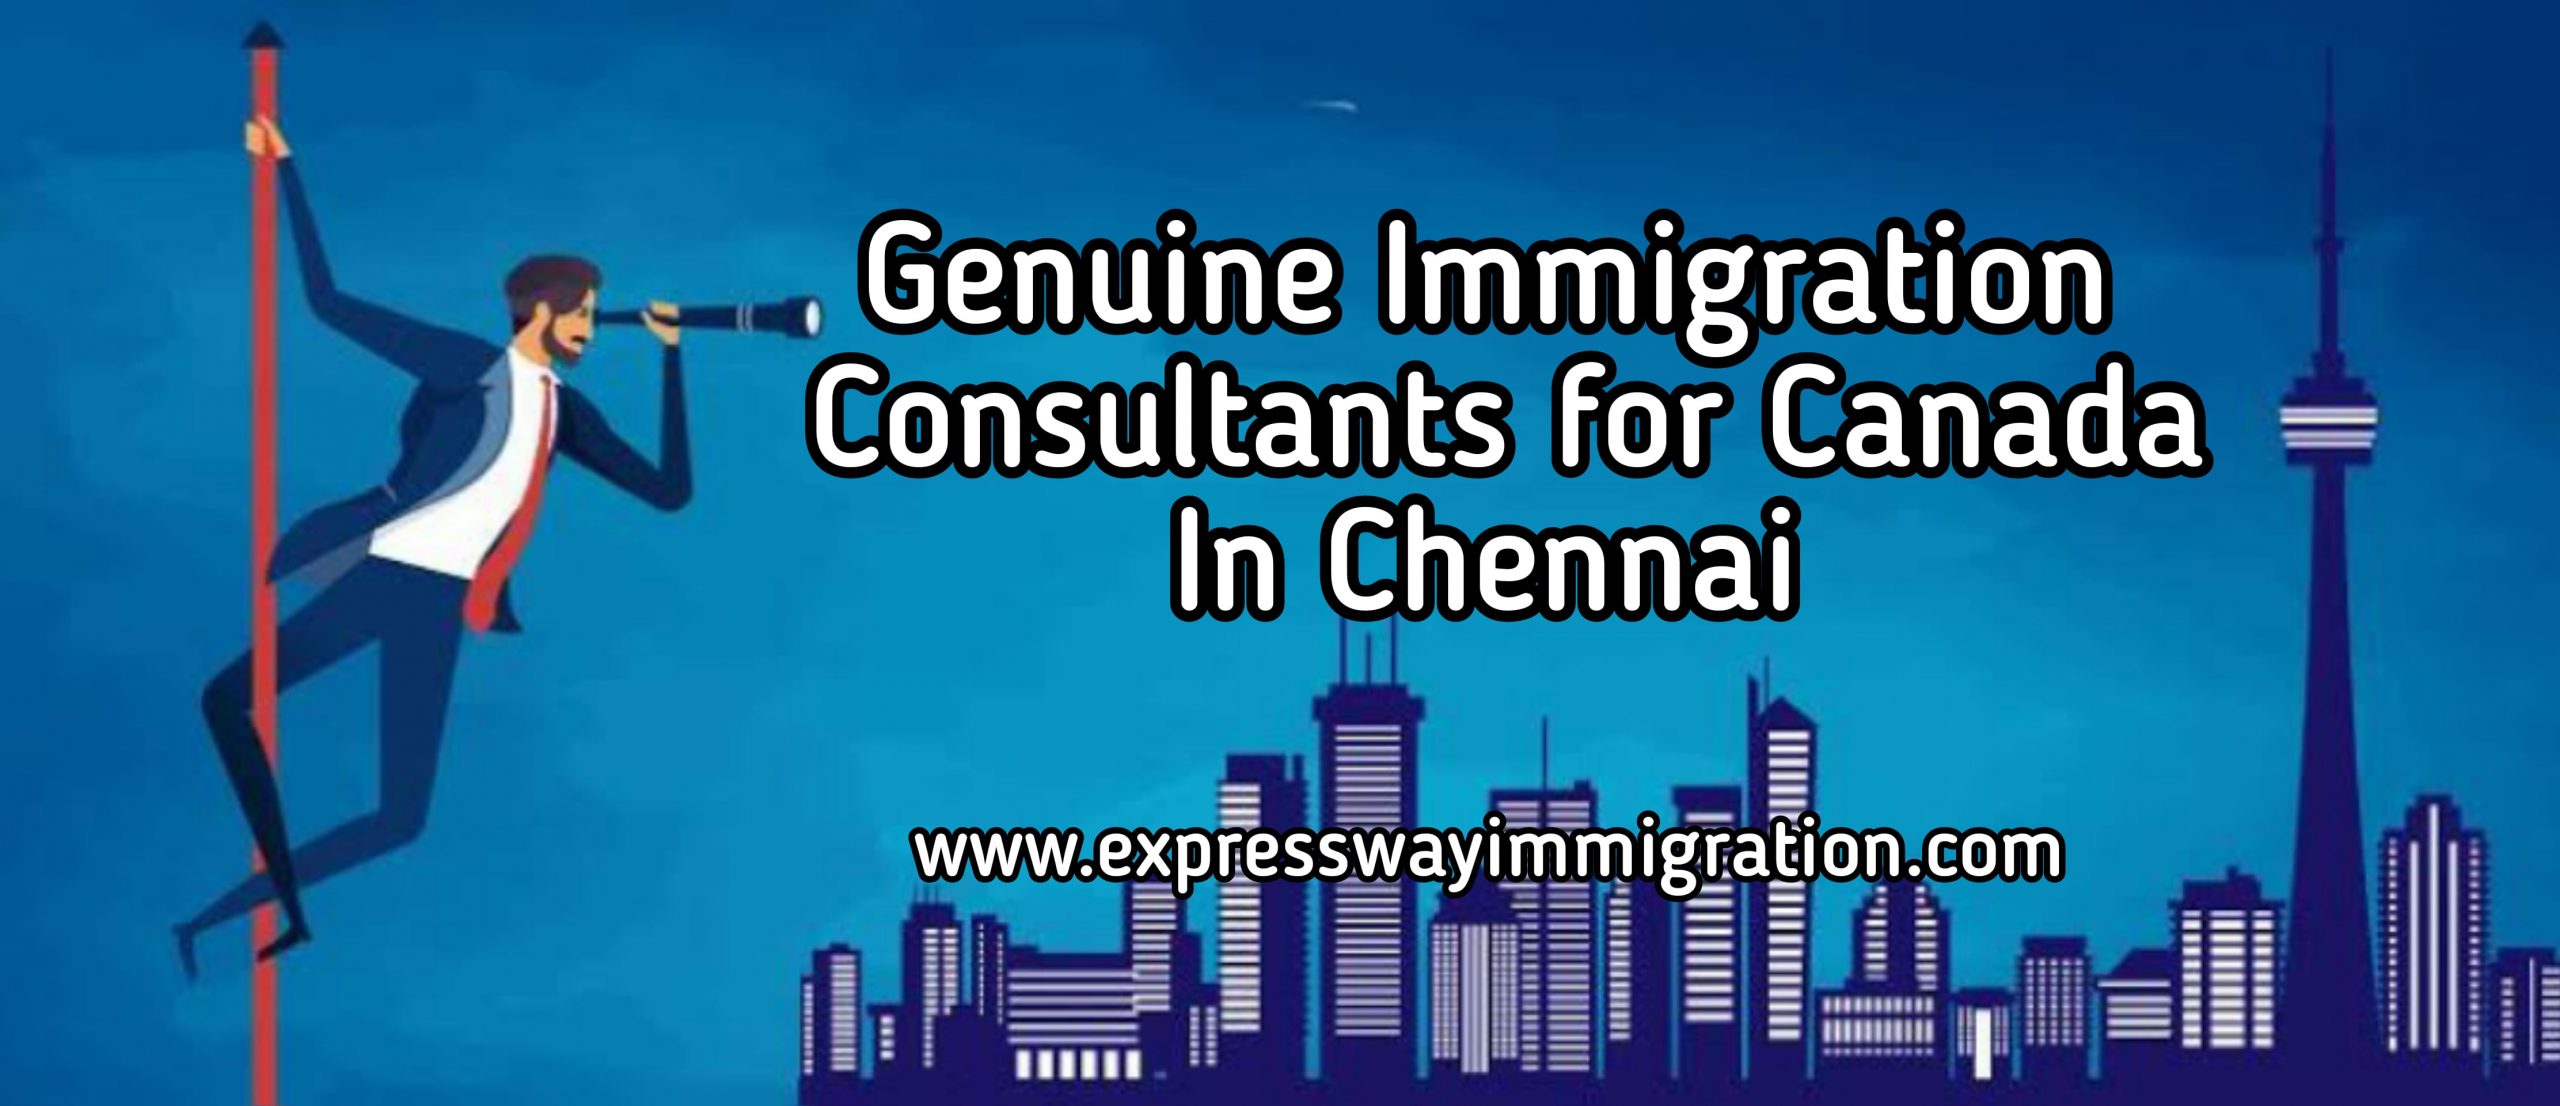 Genuine immigration consultants for Canada in Chennai